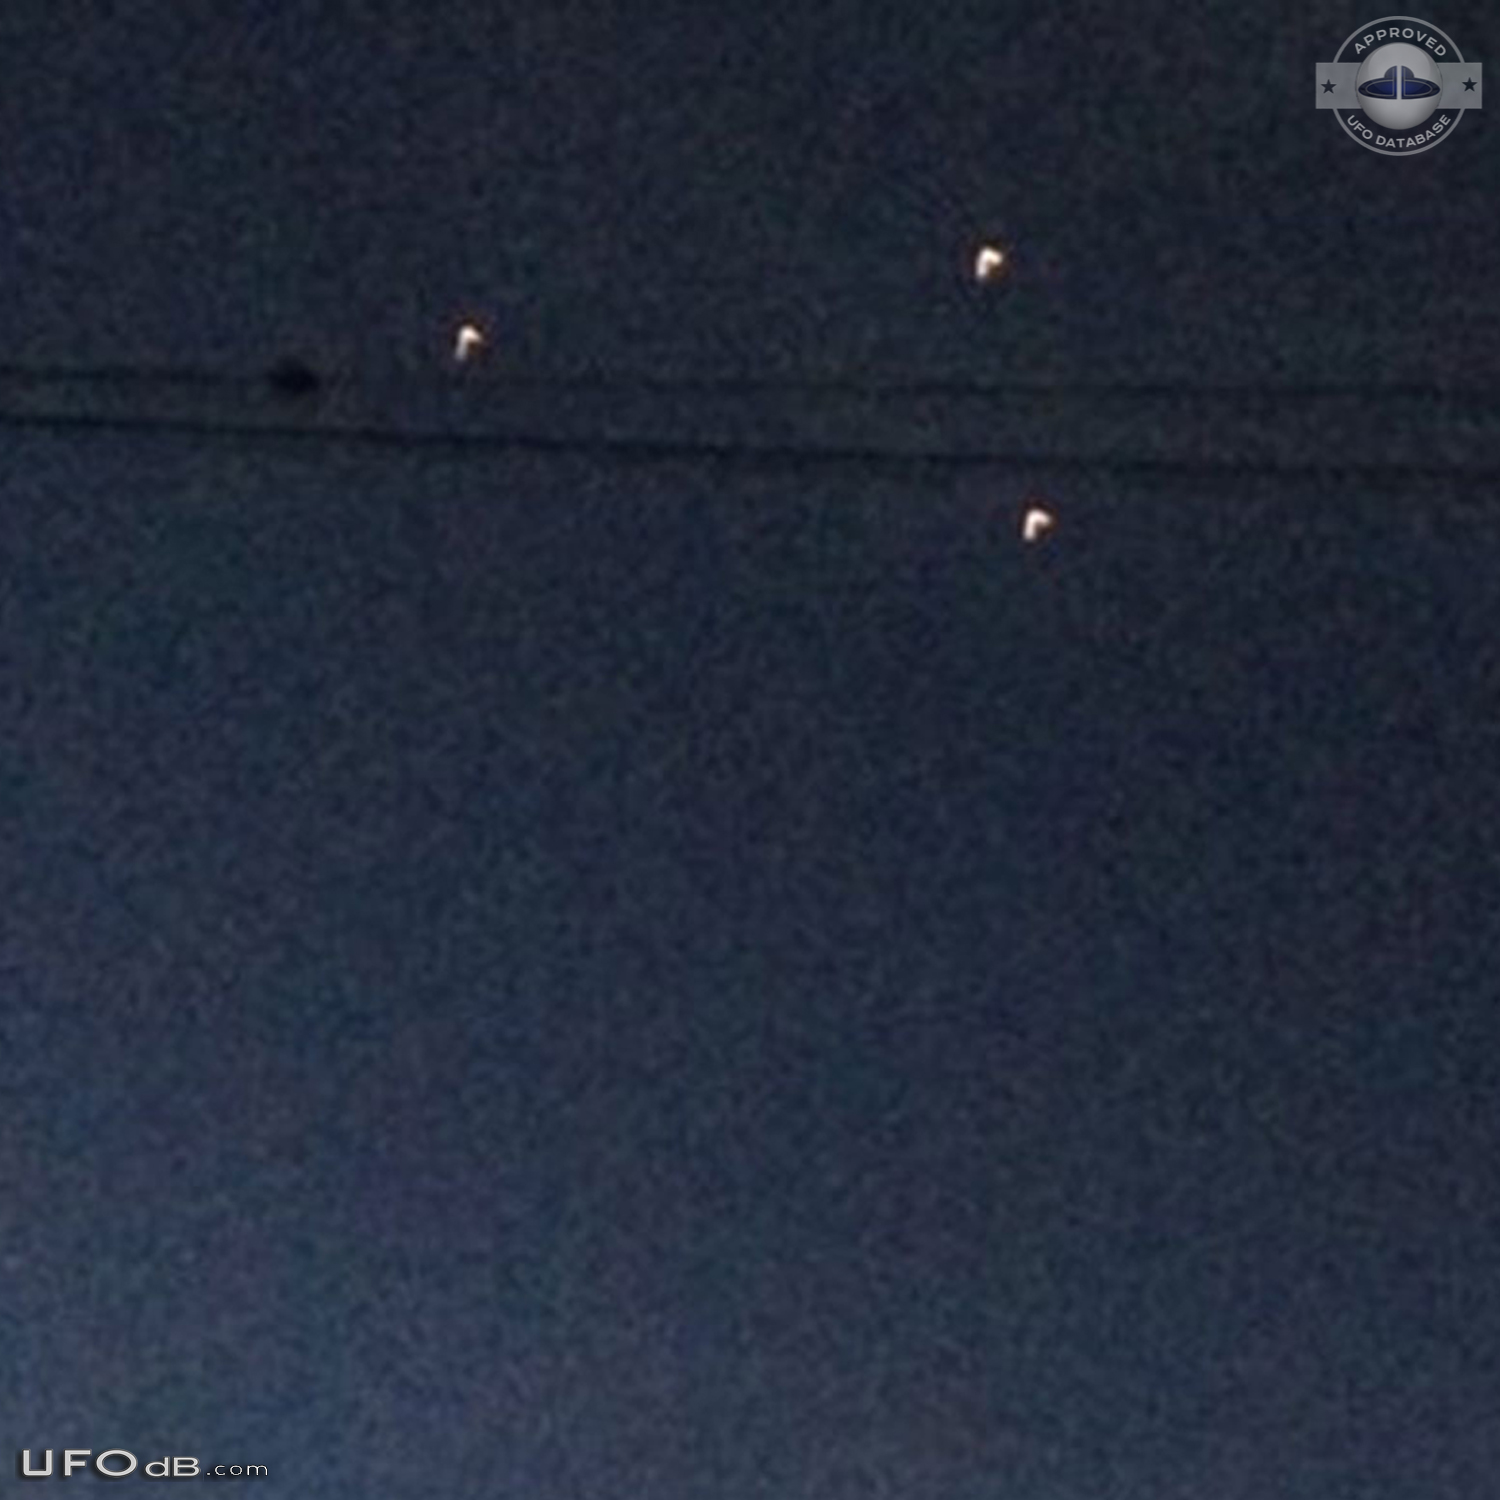 Triangle formation Orange UFOs over Grover beach, California USA 2014 UFO Picture #652-3